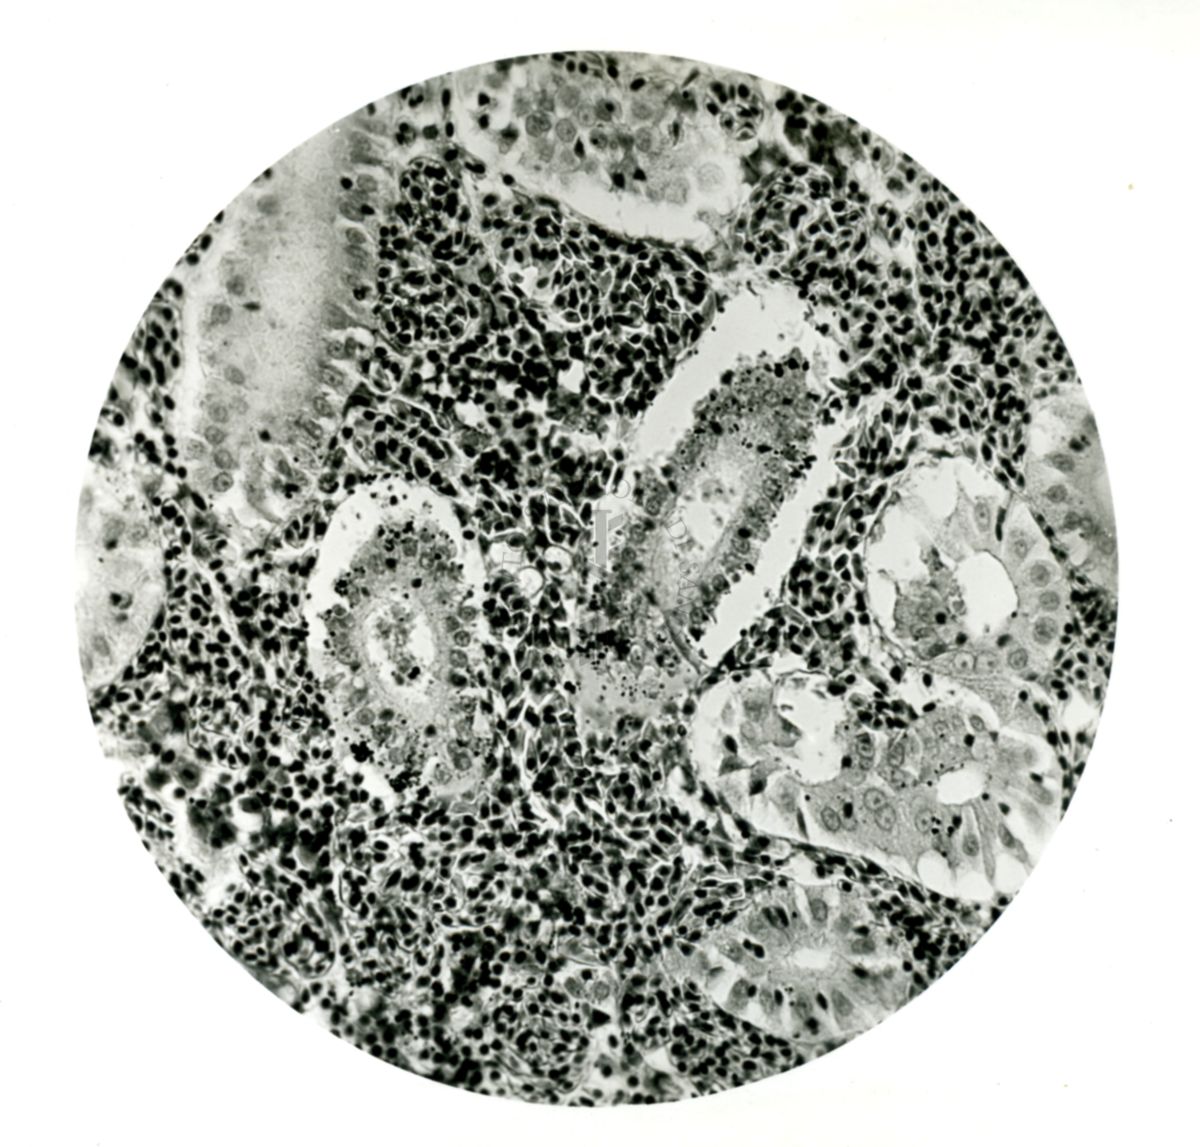 Infezione sperimentale da Proteus vulgaris: Emorragie renali in una carpa